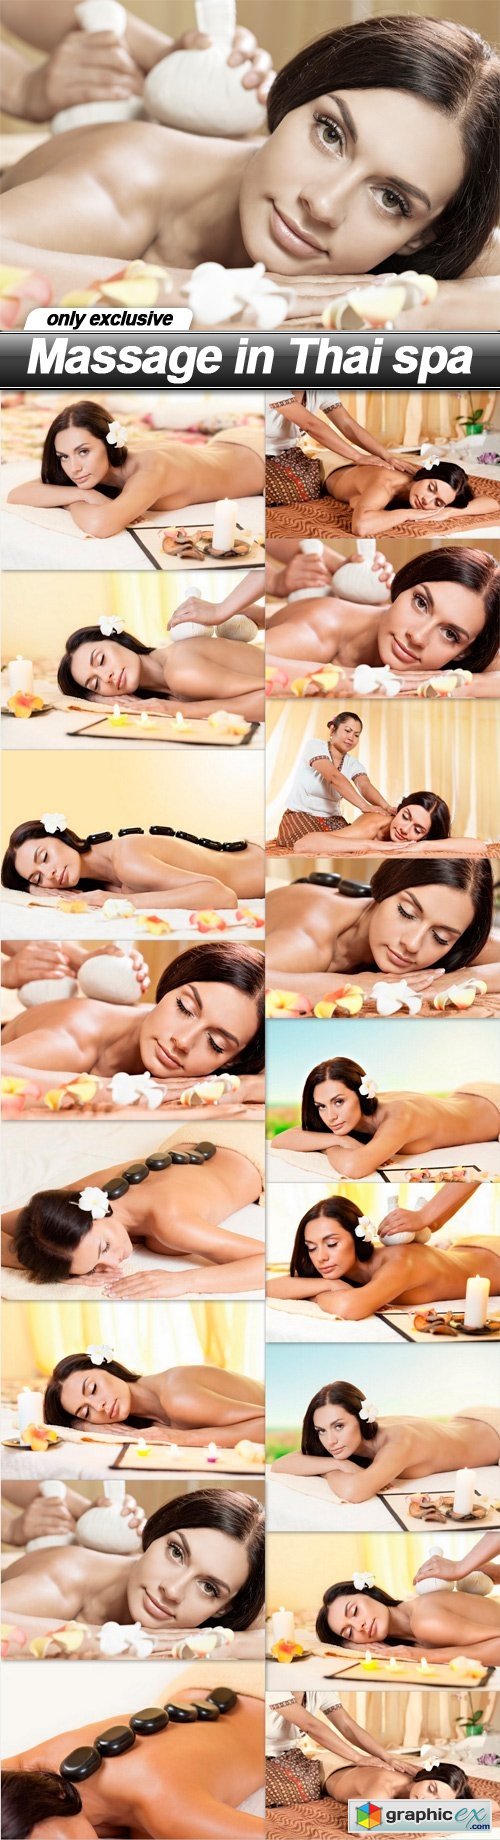 Massage in Thai spa - 17 UHQ JPEG